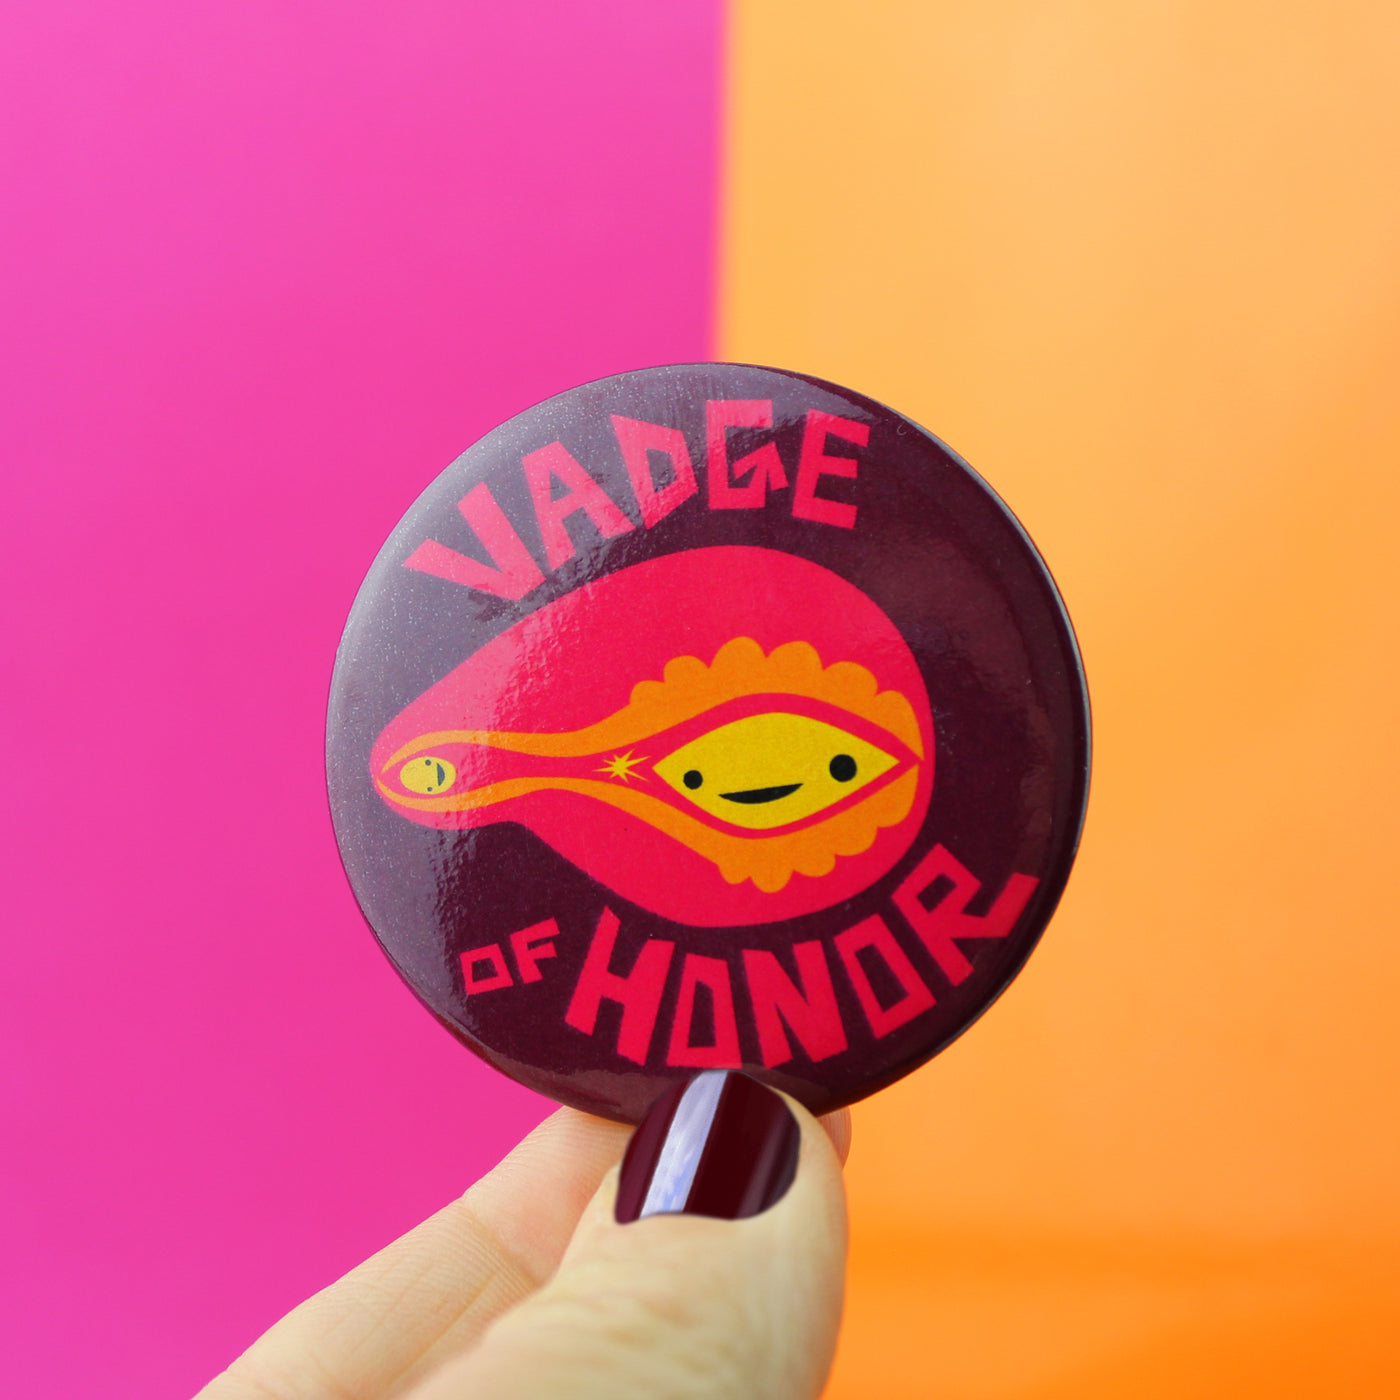 Vadge of Honor Magnet - Maroon/Hot Pink/Orange - I Heart Guts